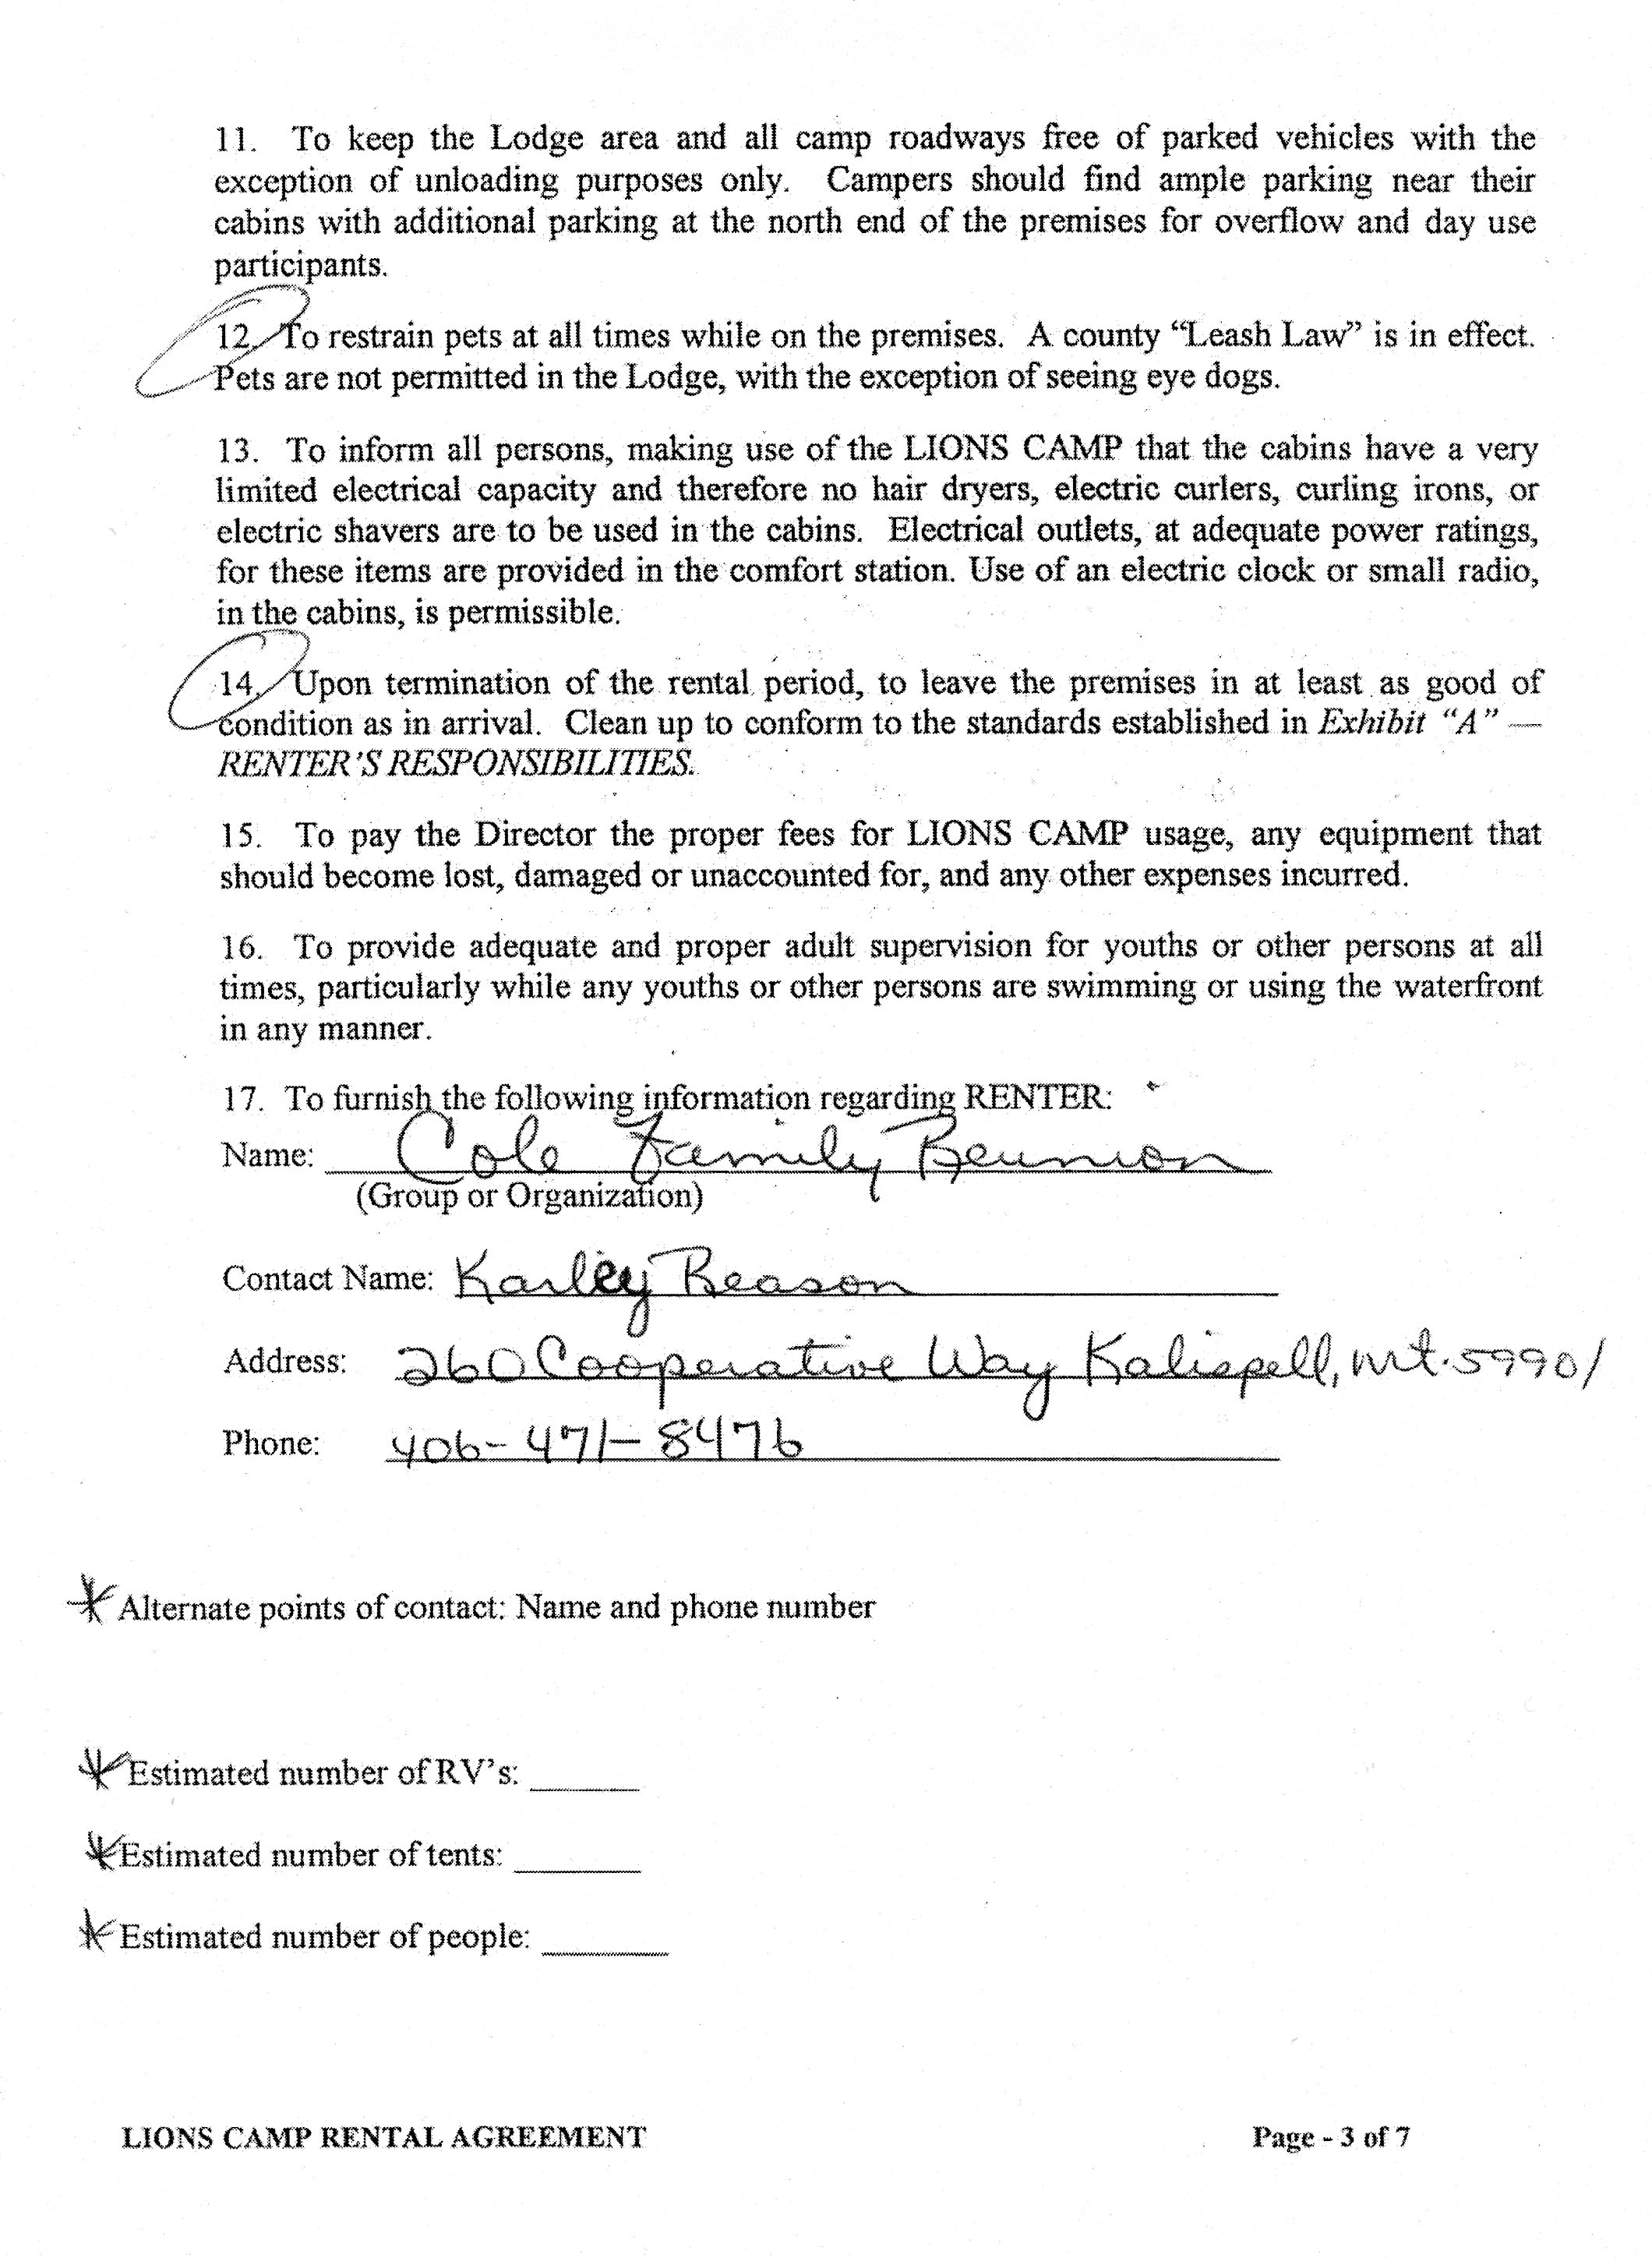 Rental Agreement Pg. 3 of 7